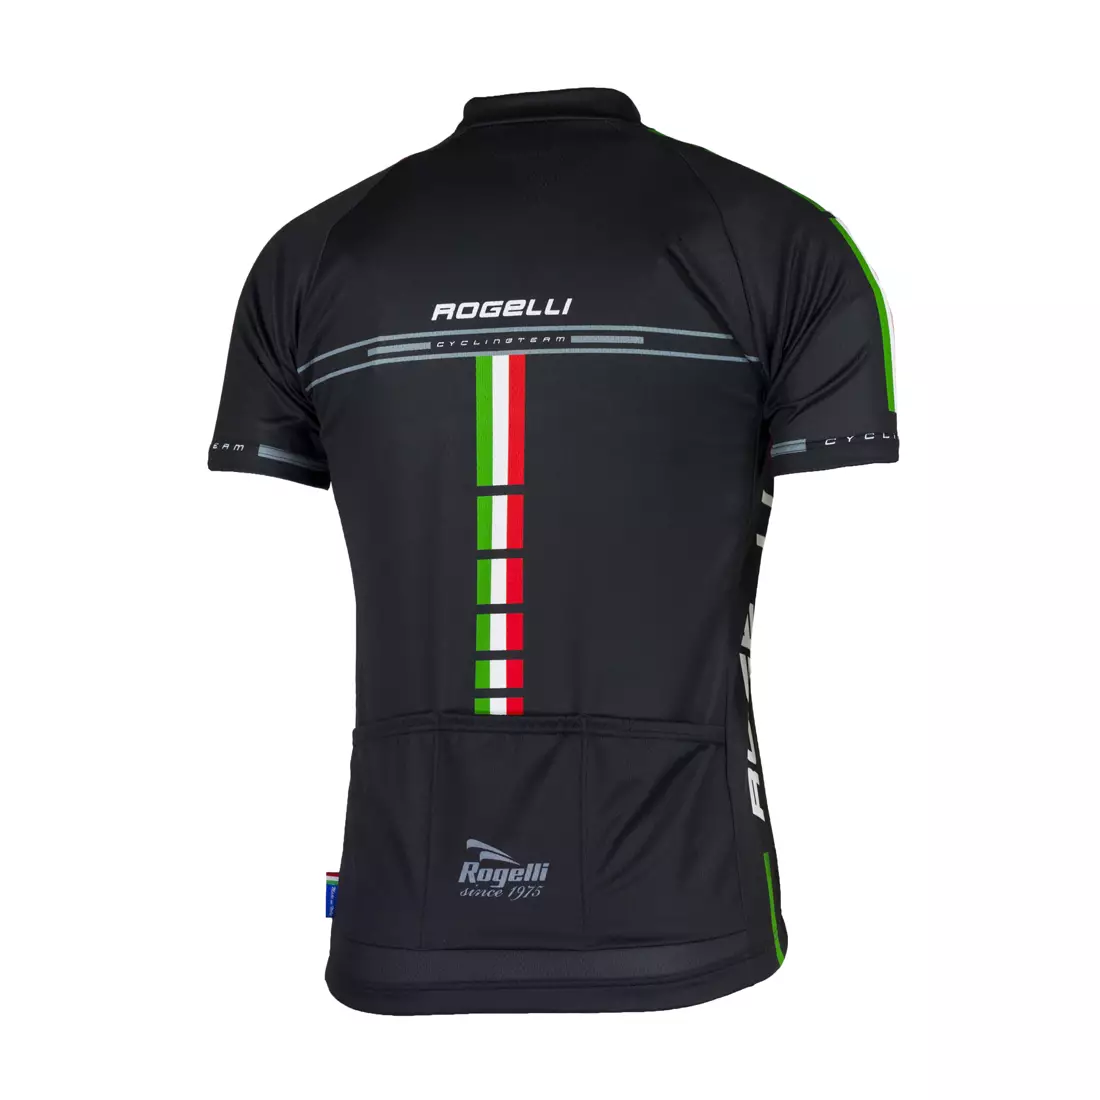 ROGELLI TEAM - men's cycling jersey 001.965, Black